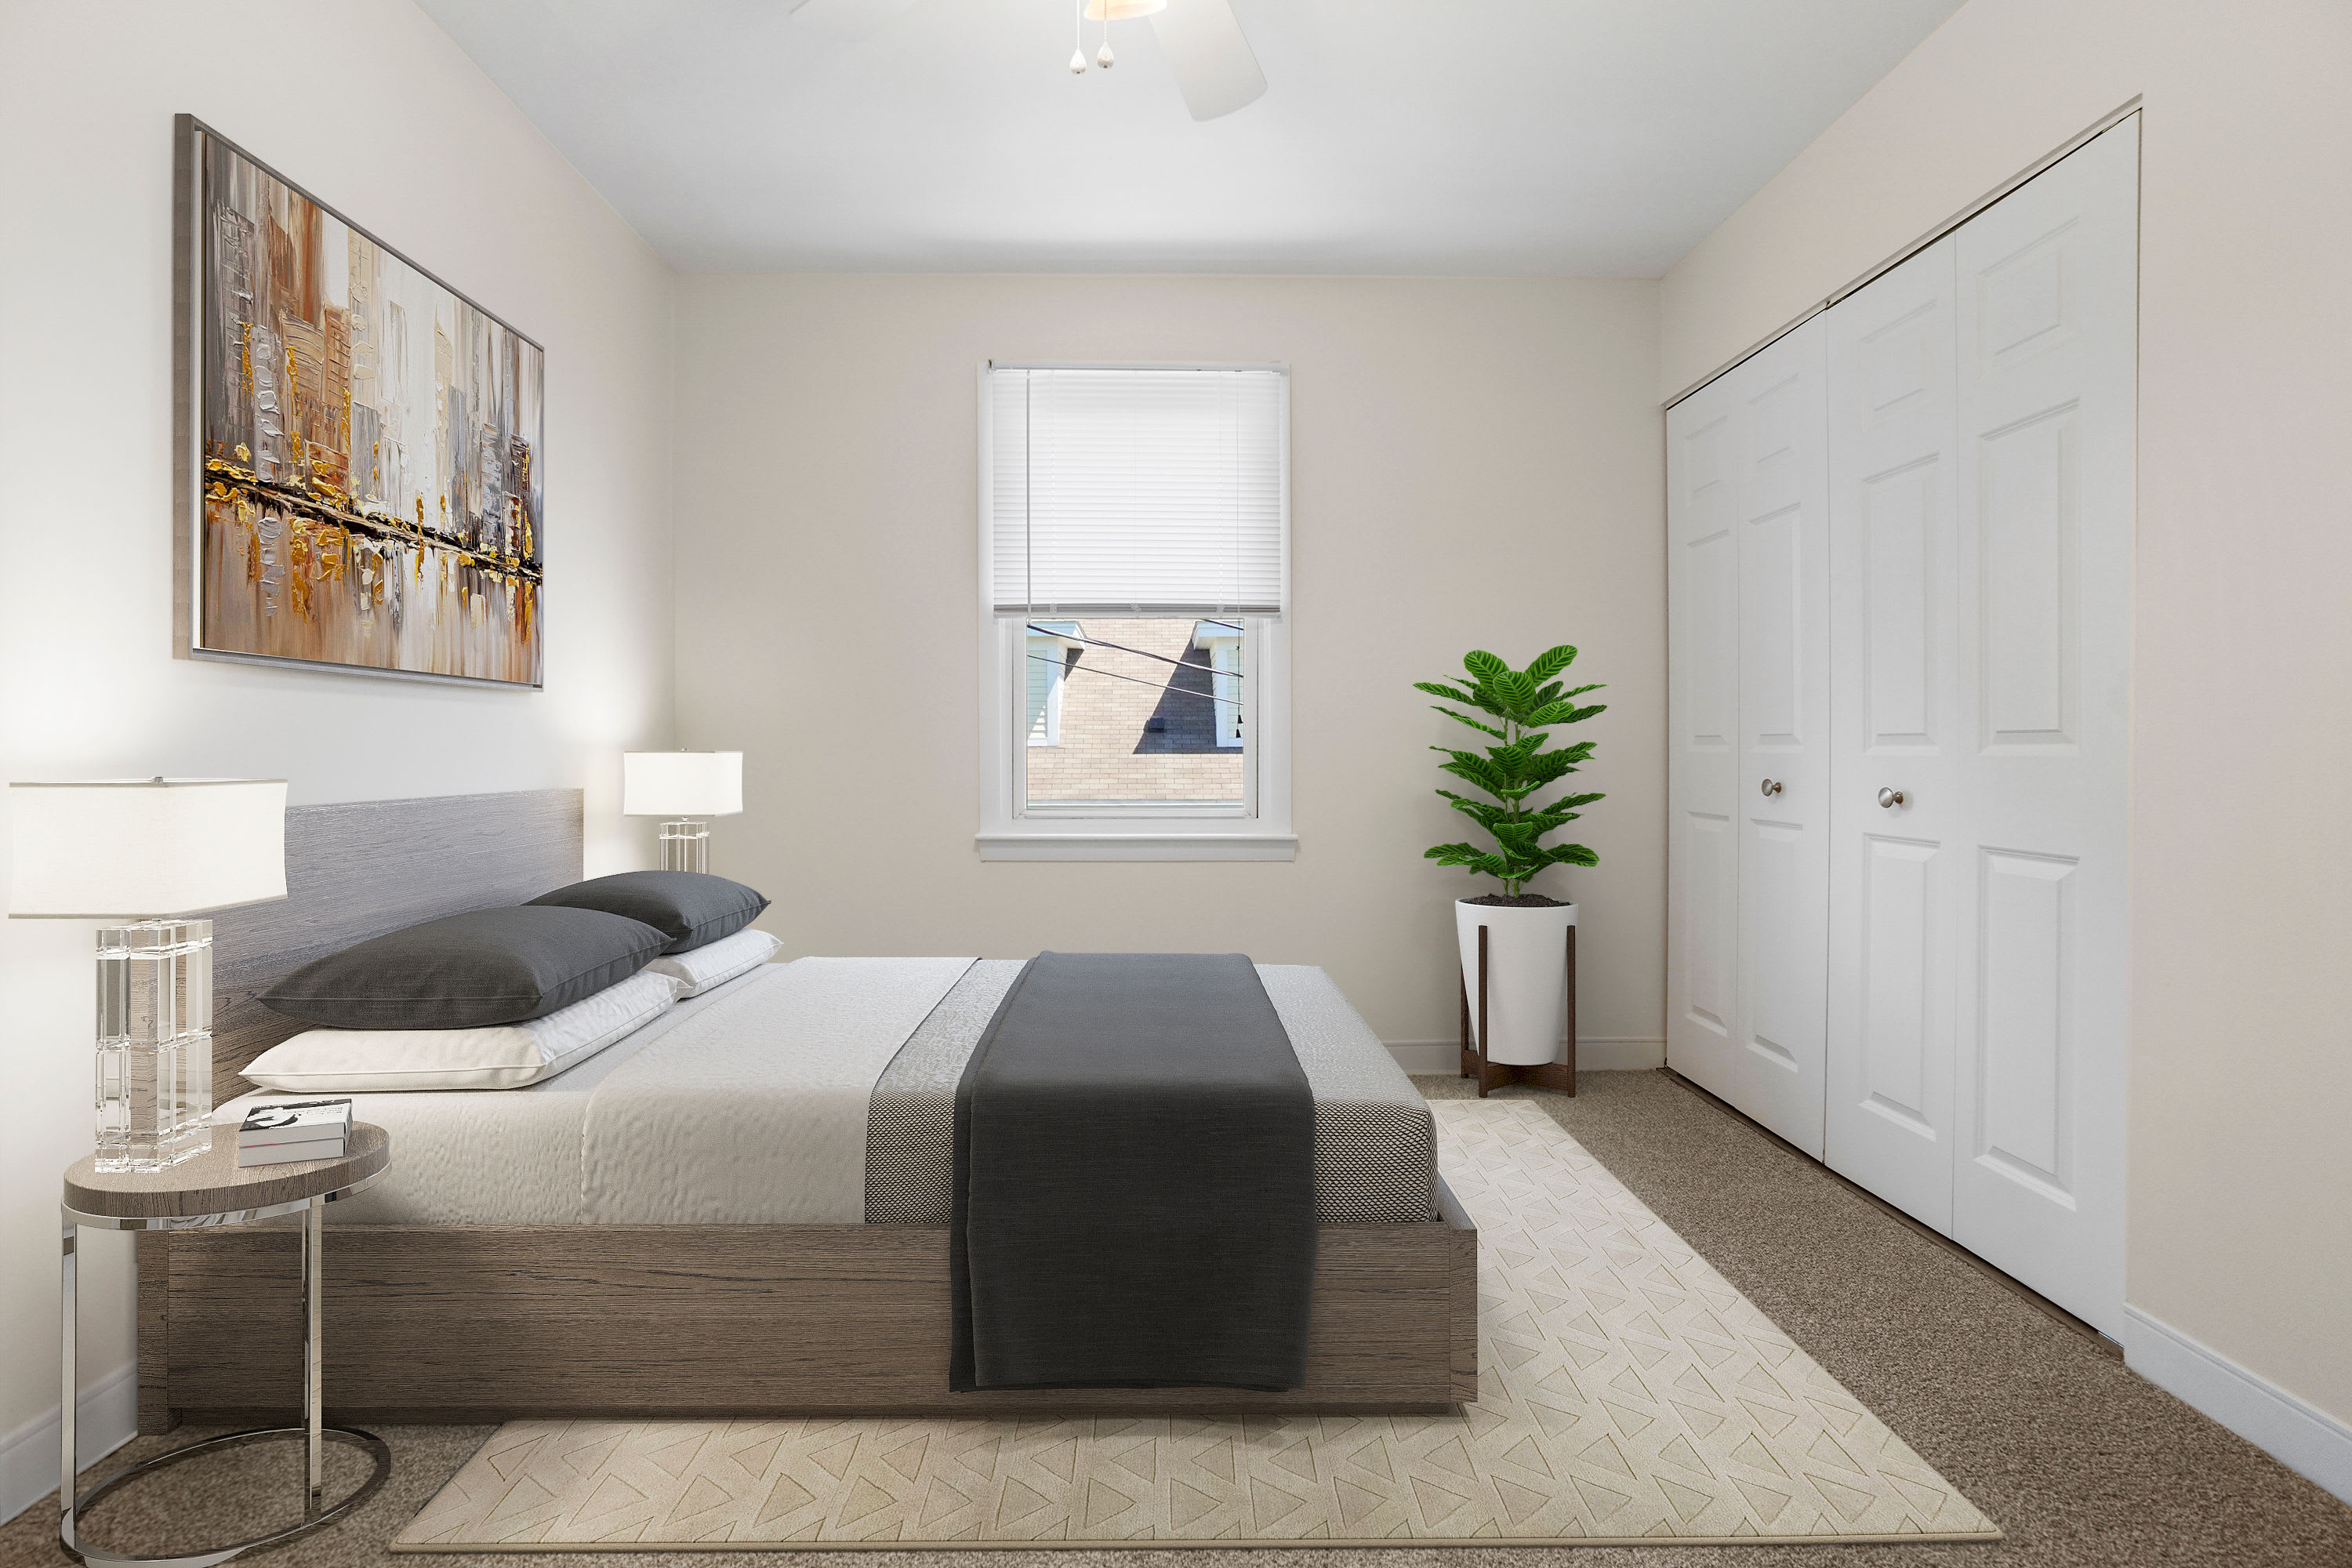 Bedroom at Apartments in Roslindale, Massachusetts